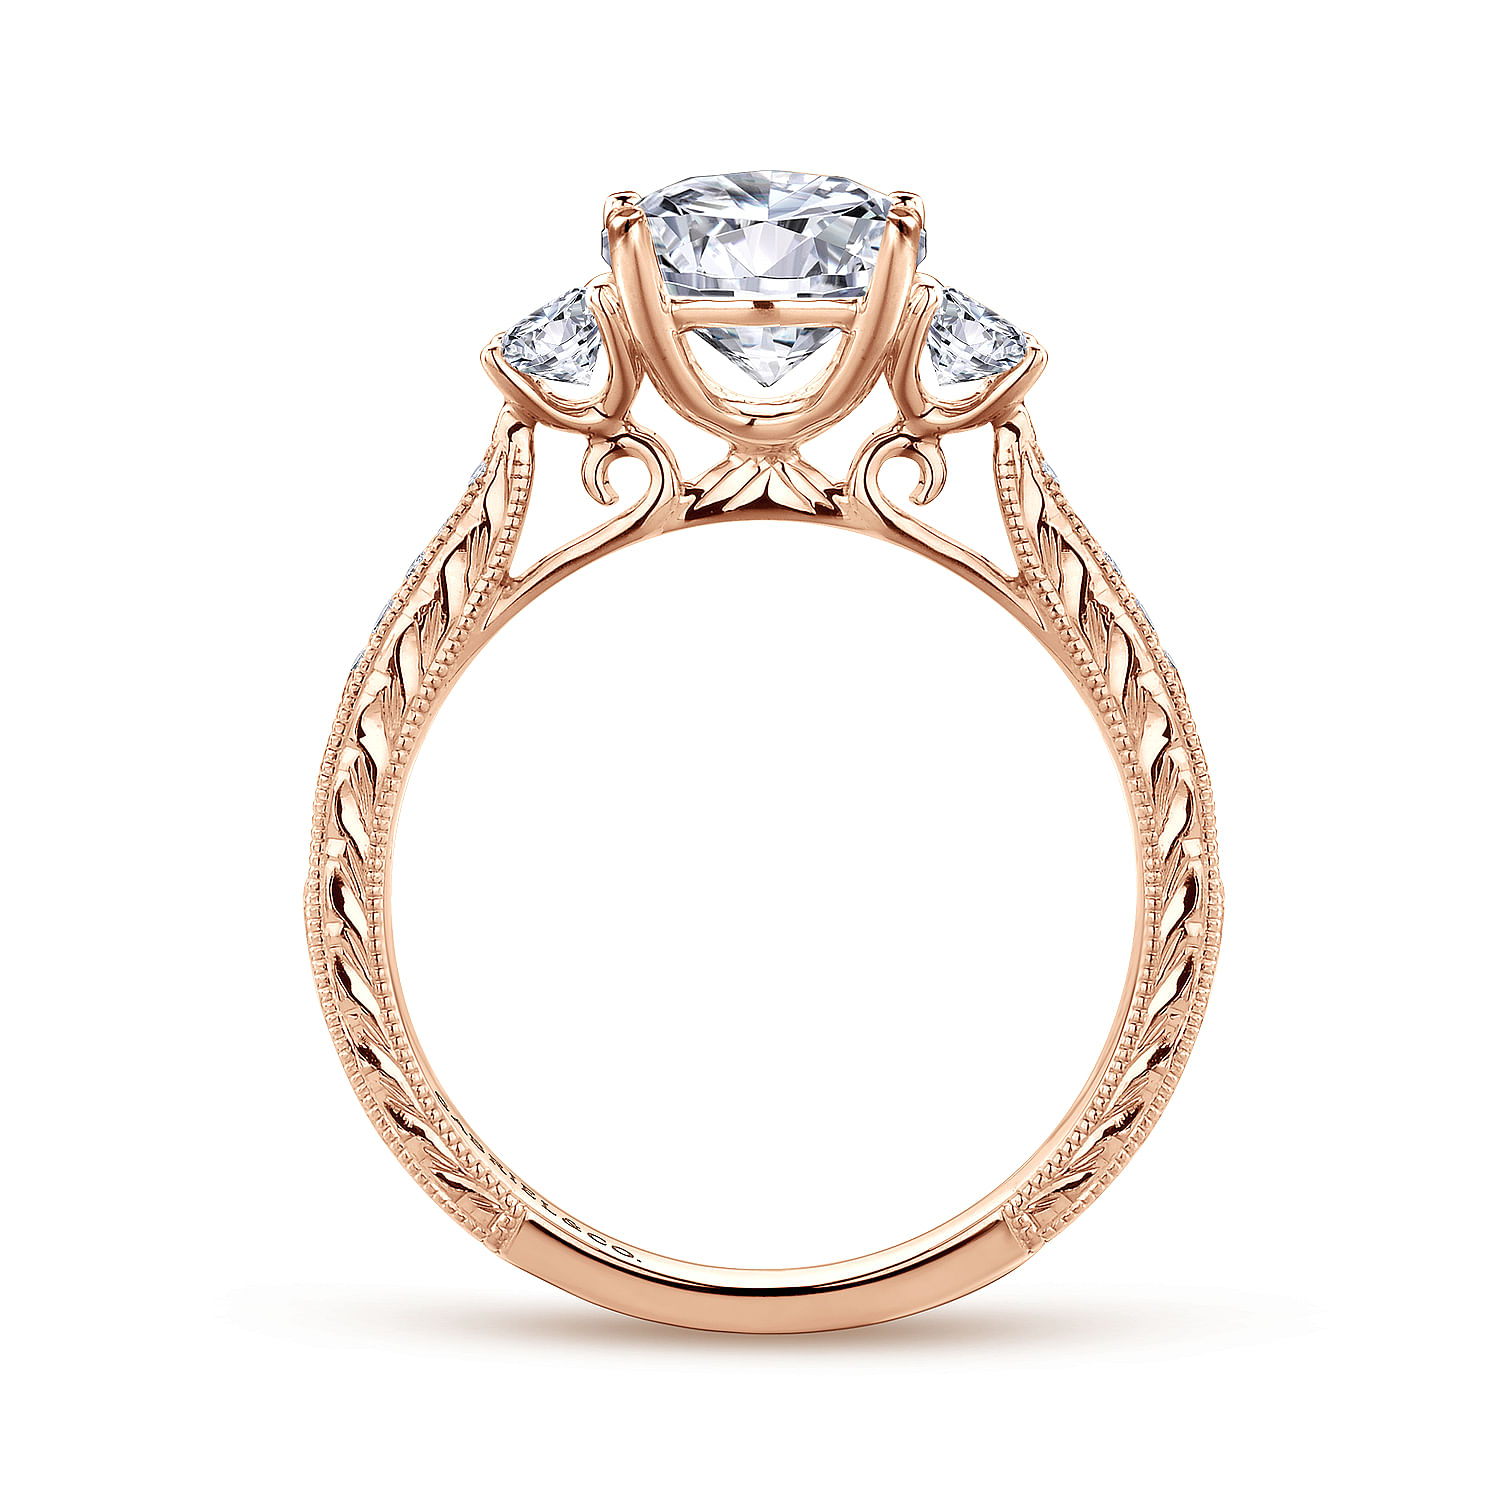 Vintage Inspired 14K Rose Gold Round Three Stone Diamond Engagement Ring